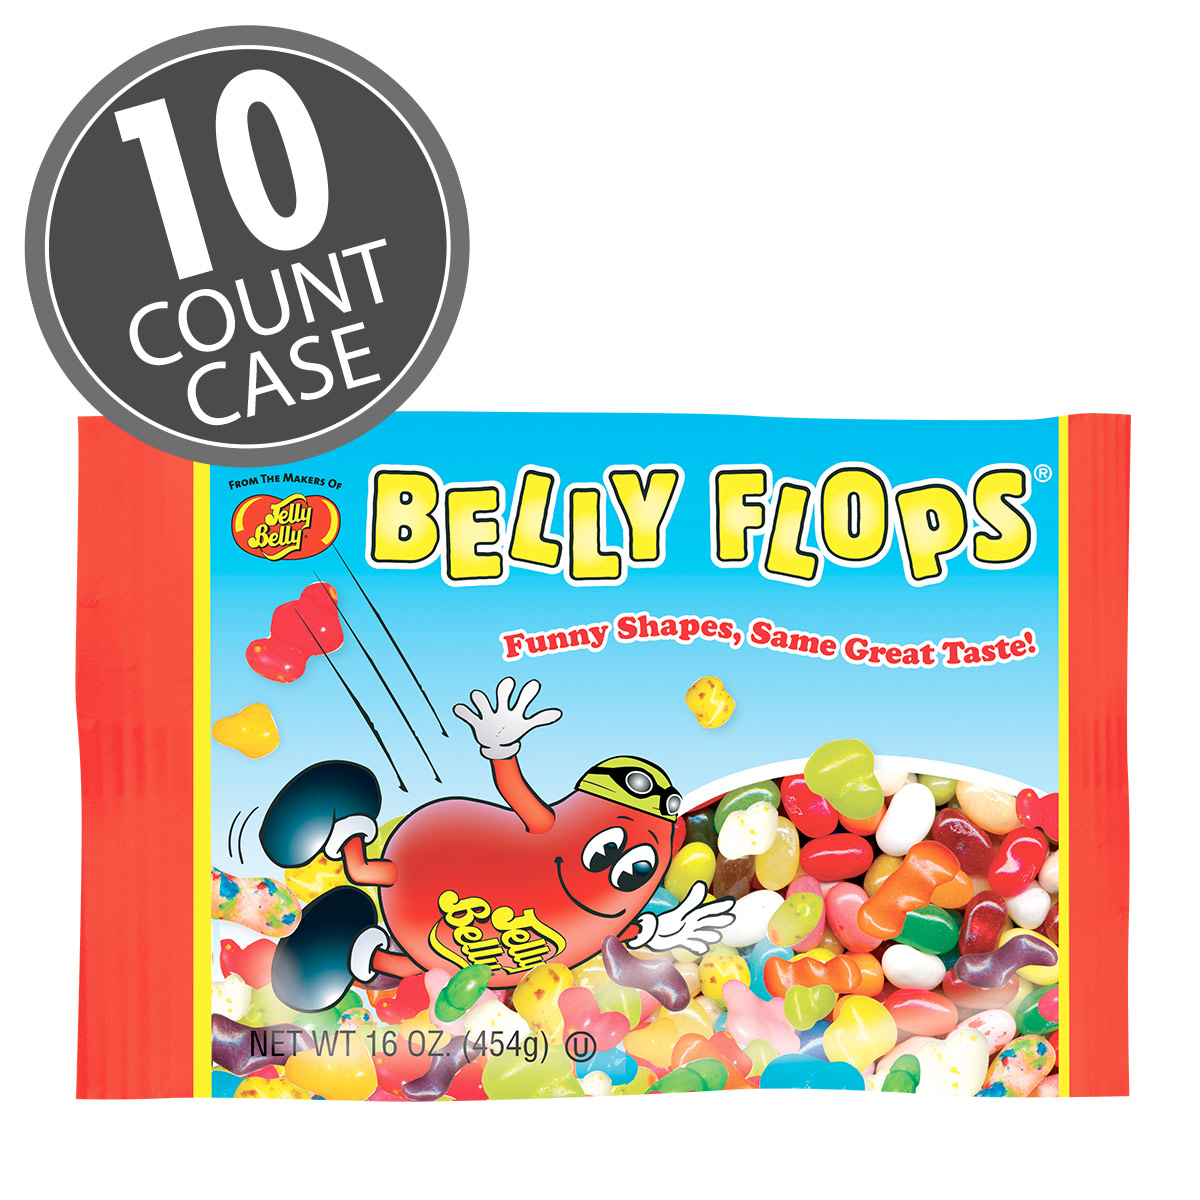 Belly Flops® Jelly Beans - 2 lb. Bag